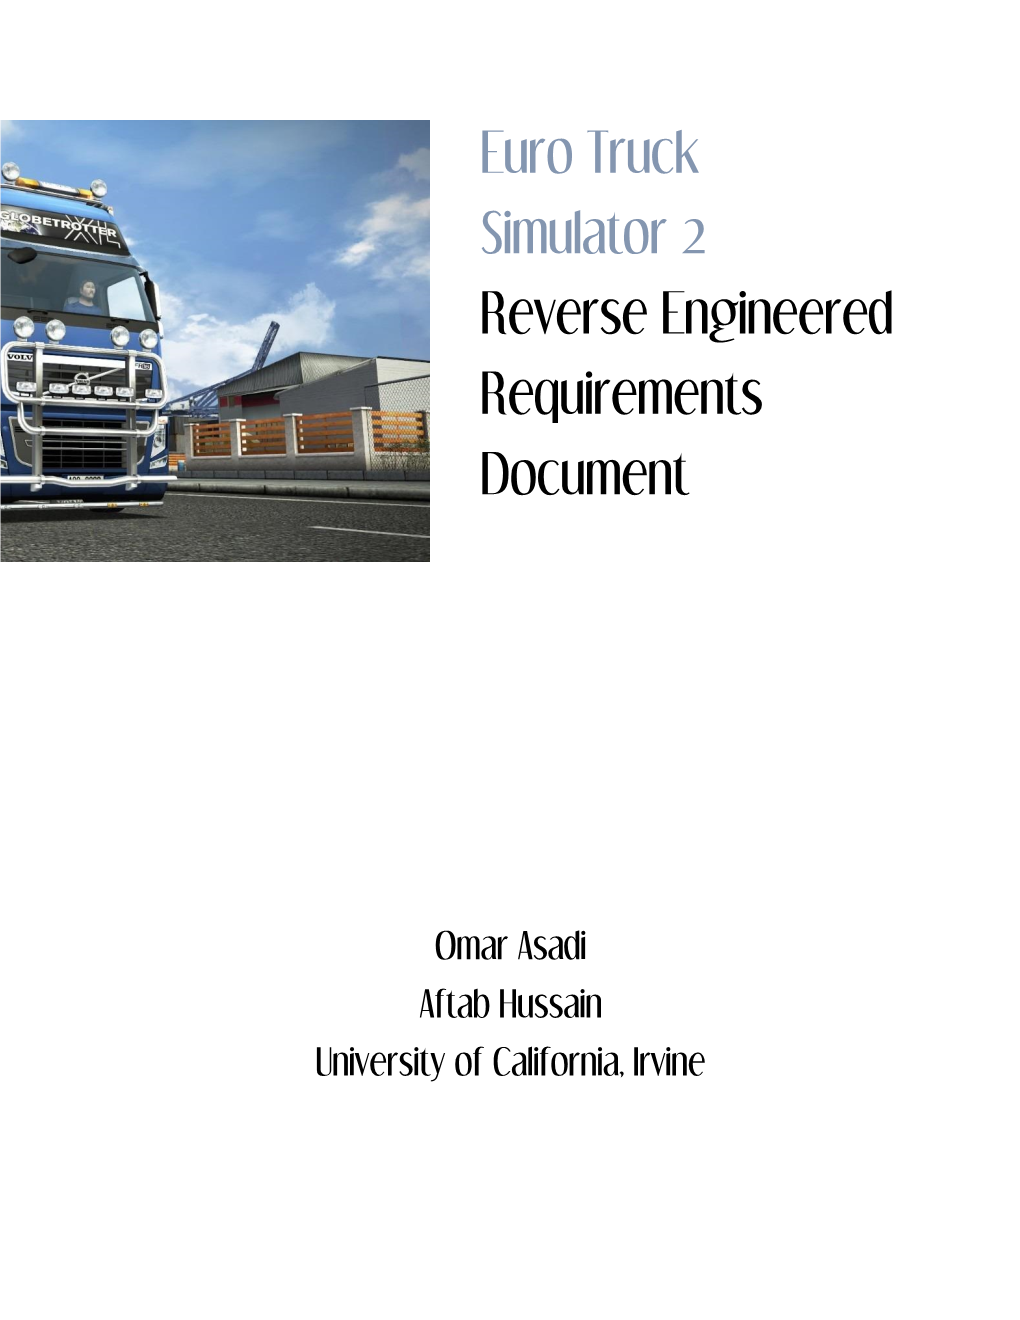 Euro Truck Simulator 2 Reverse Engineered Requirements Document